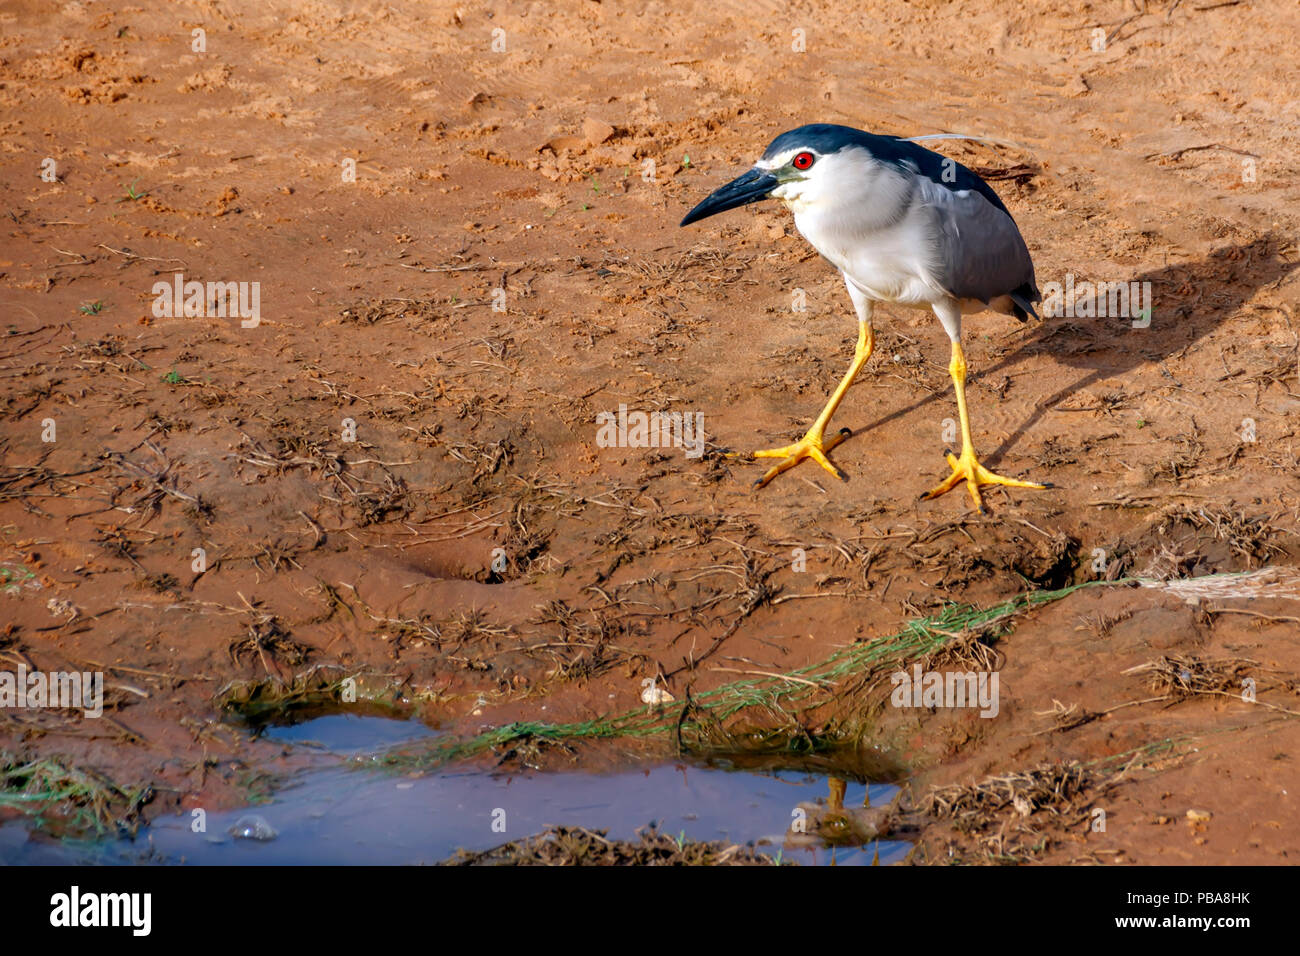 Black-crowned night heron bird standing near the water Stock Photo